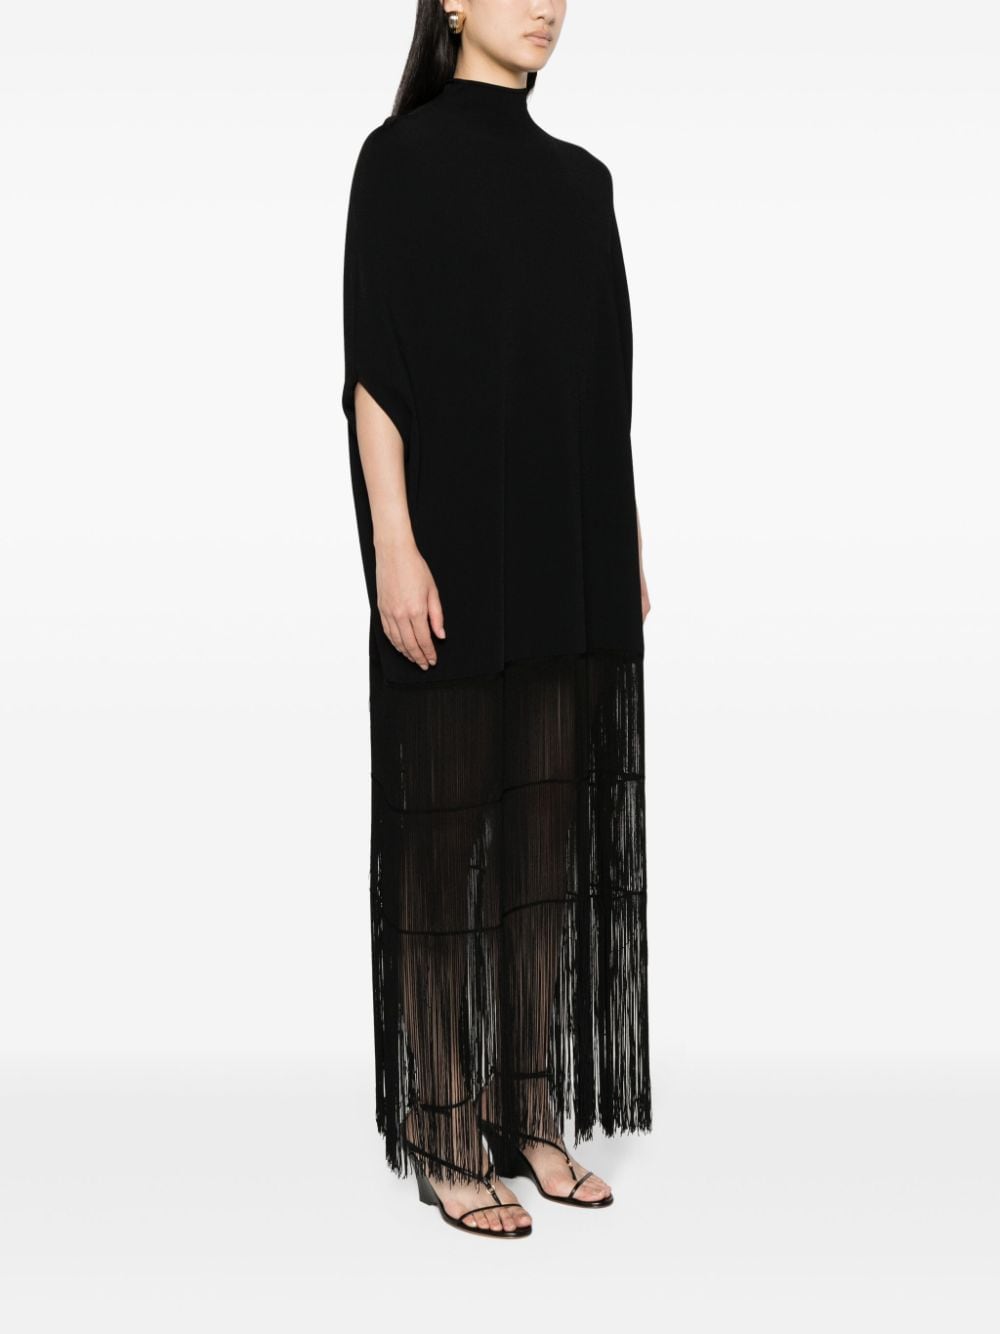 KHAITE Black Fringed Maxi Dress for Women - Stretch Crepe Fabric and Unique Details